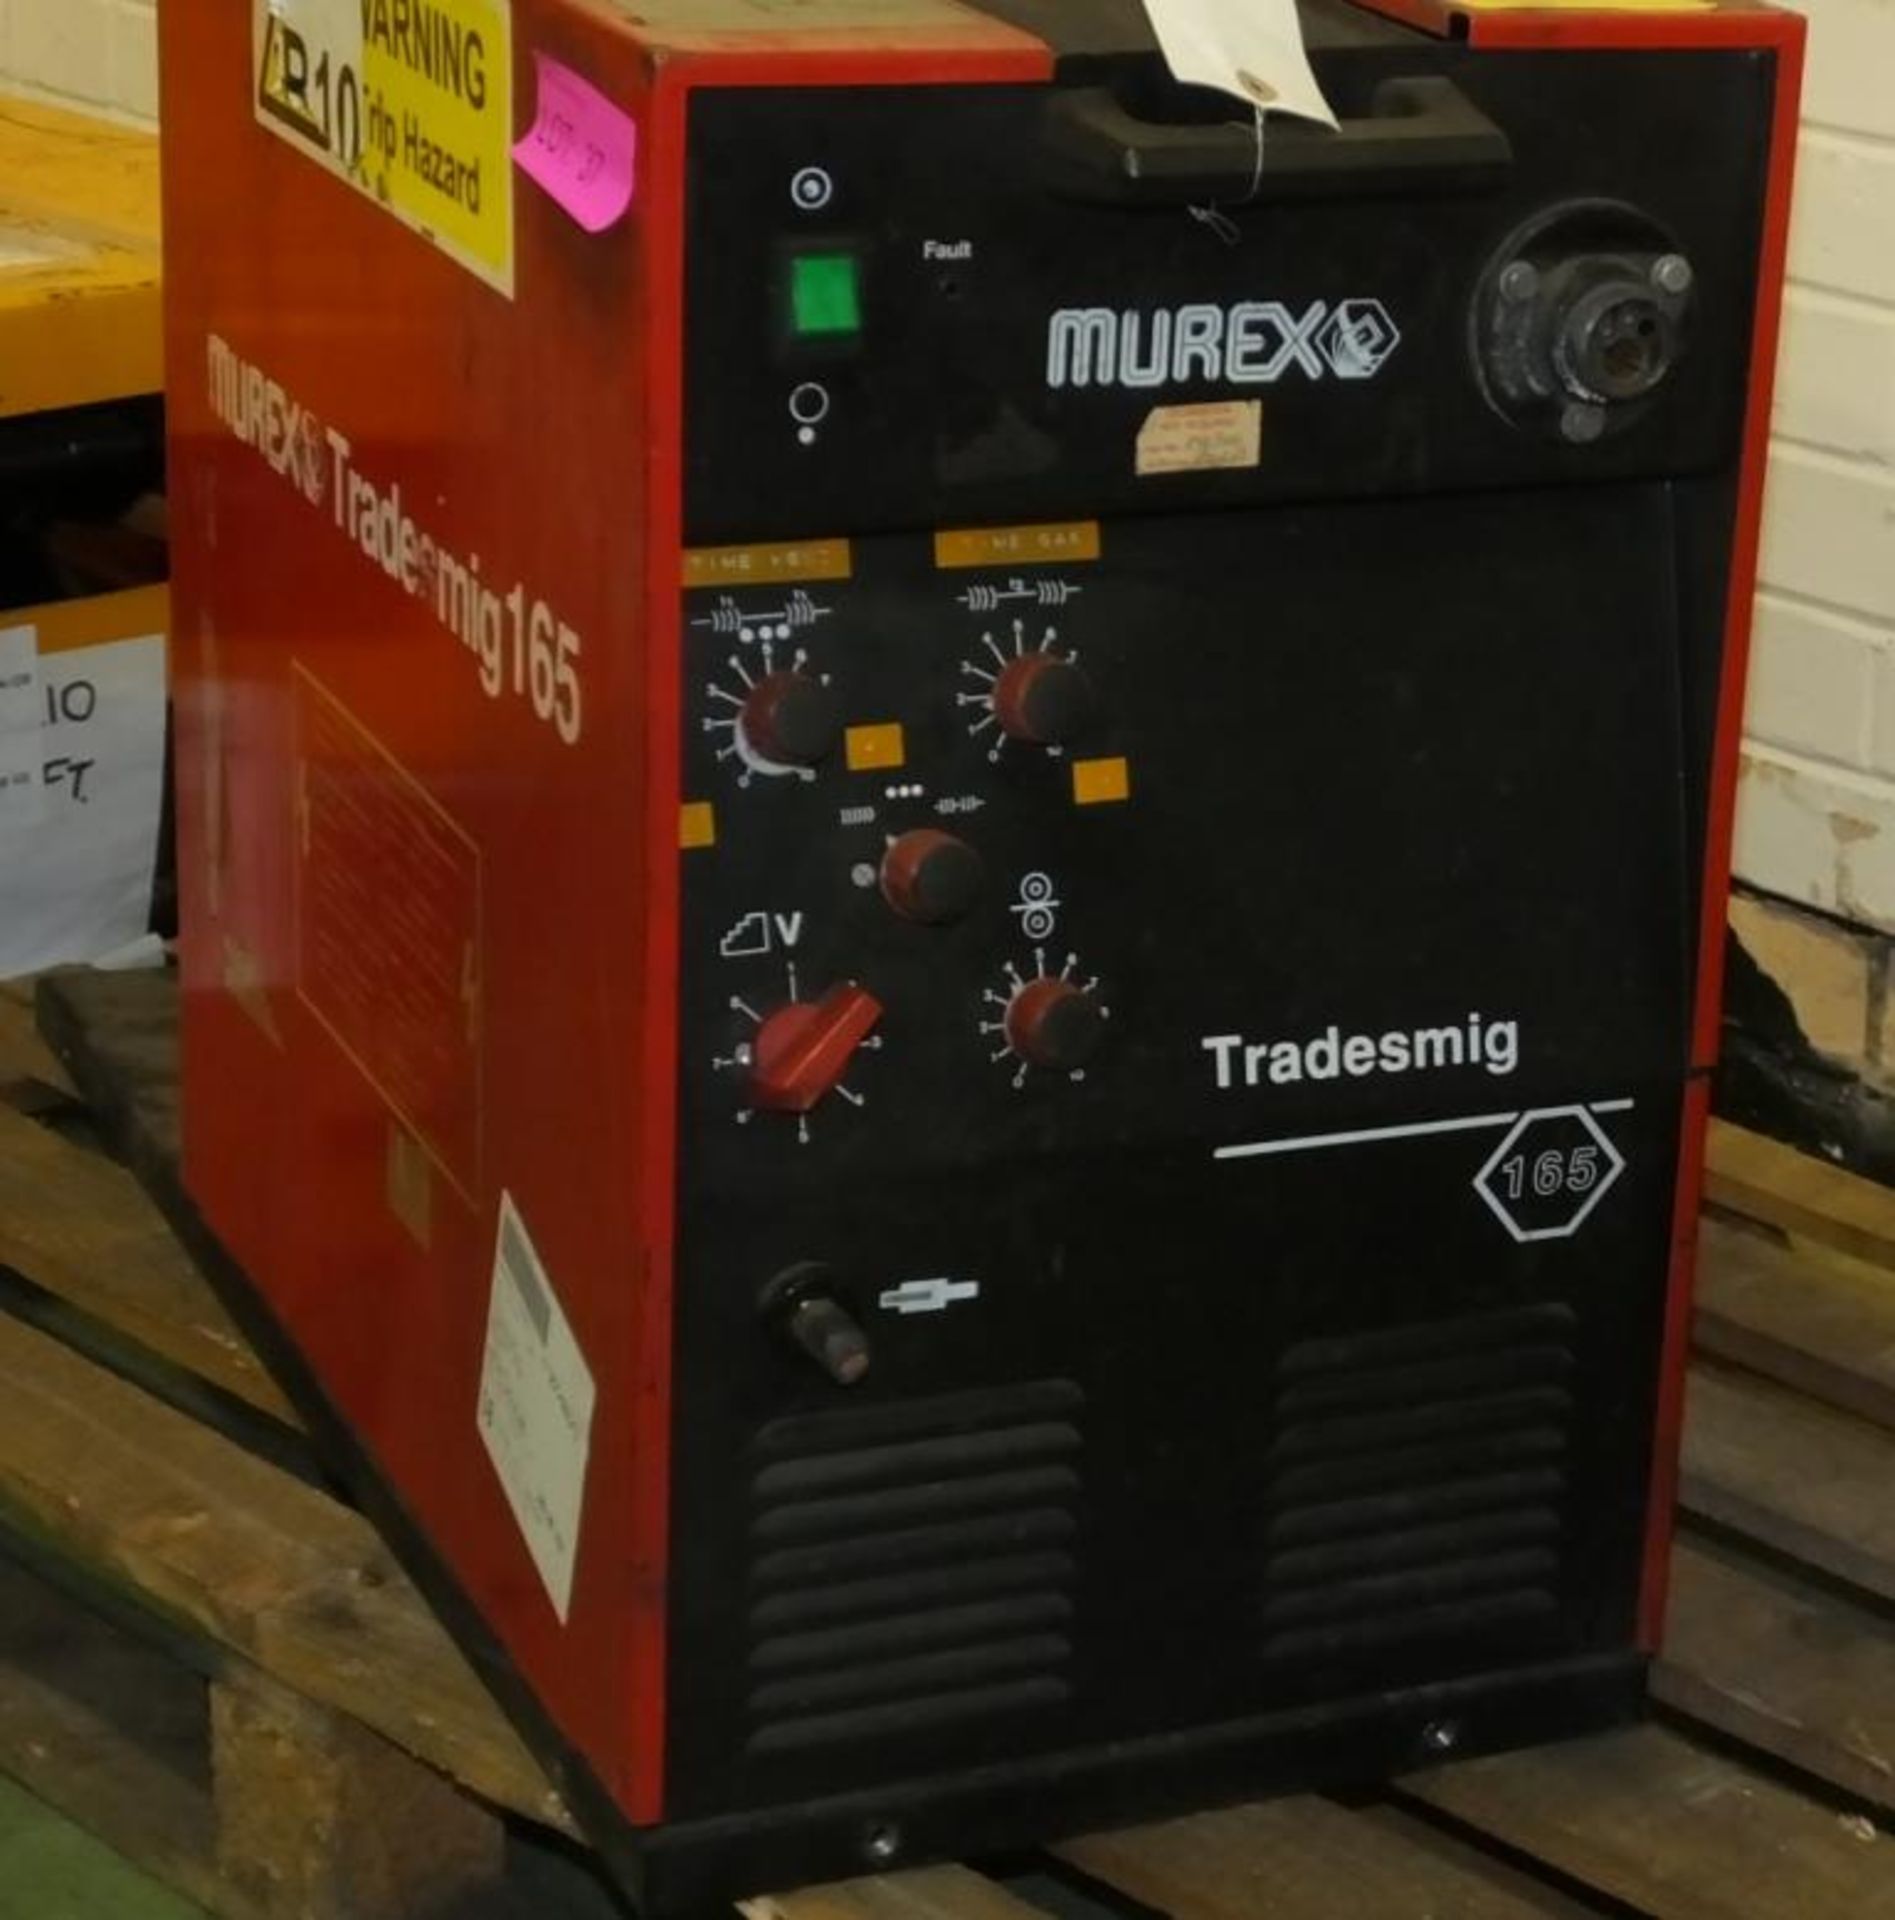 Murex TradesMig 165 Welding Unit - no accessories - Image 2 of 2